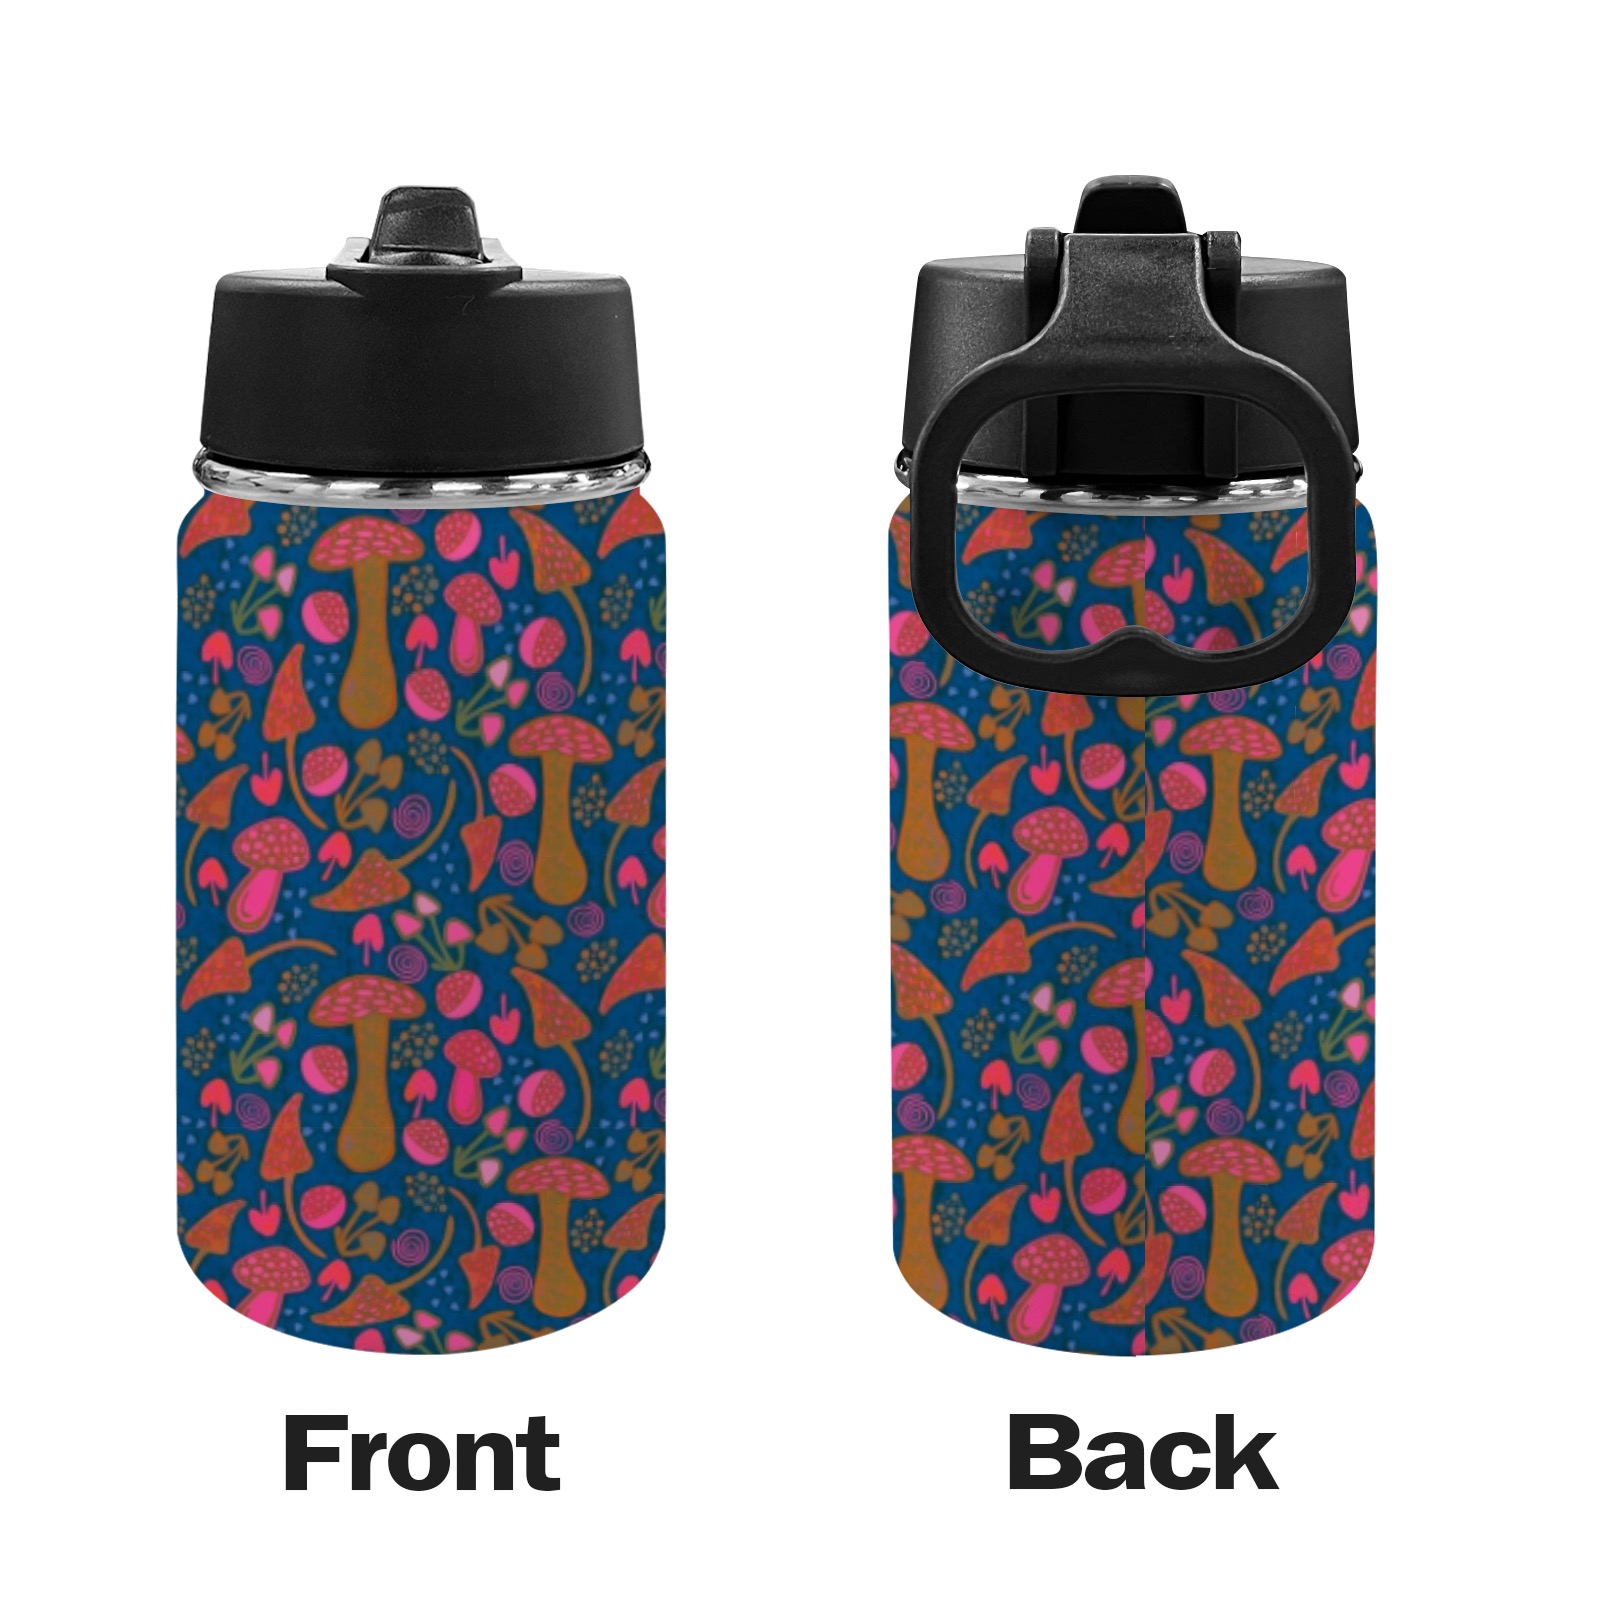 Unique Mushroom Pattern Design Kids Water Bottle with Straw Lid (12 oz)